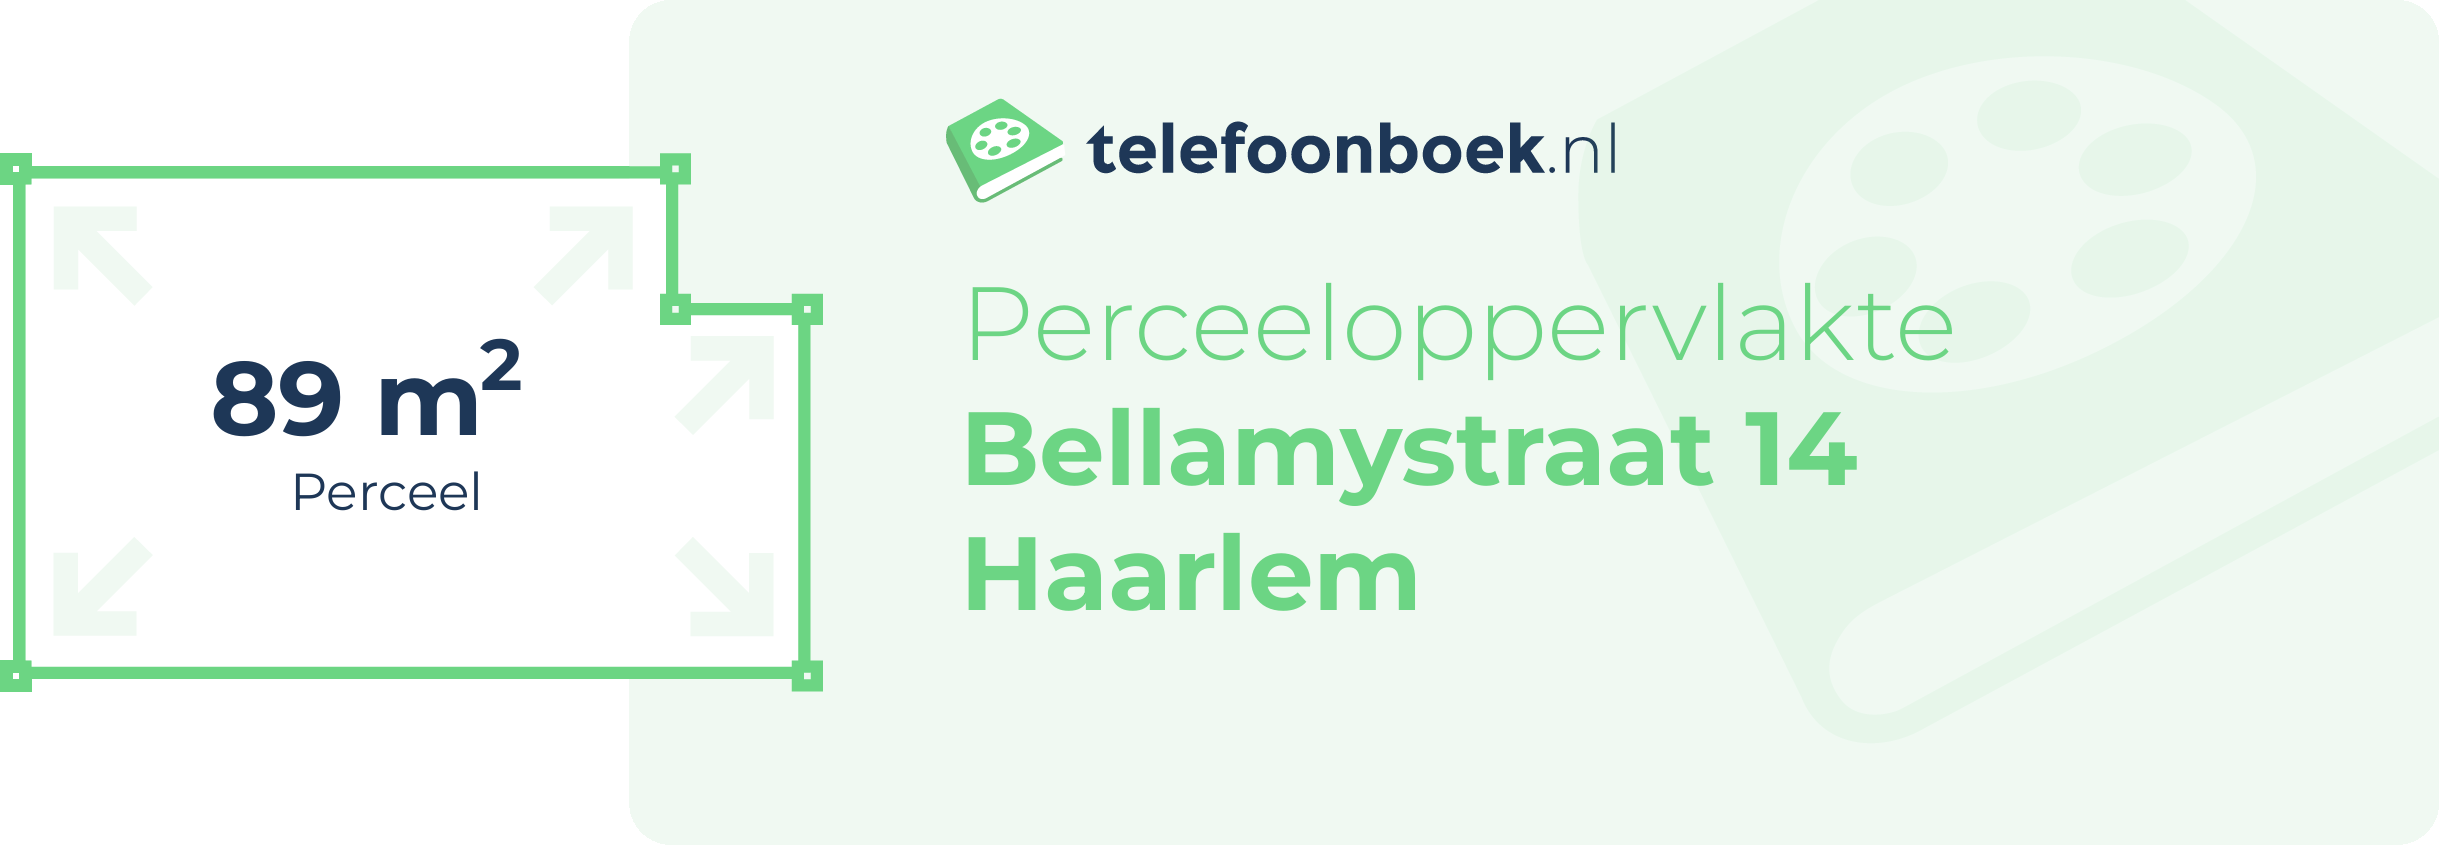 Perceeloppervlakte Bellamystraat 14 Haarlem